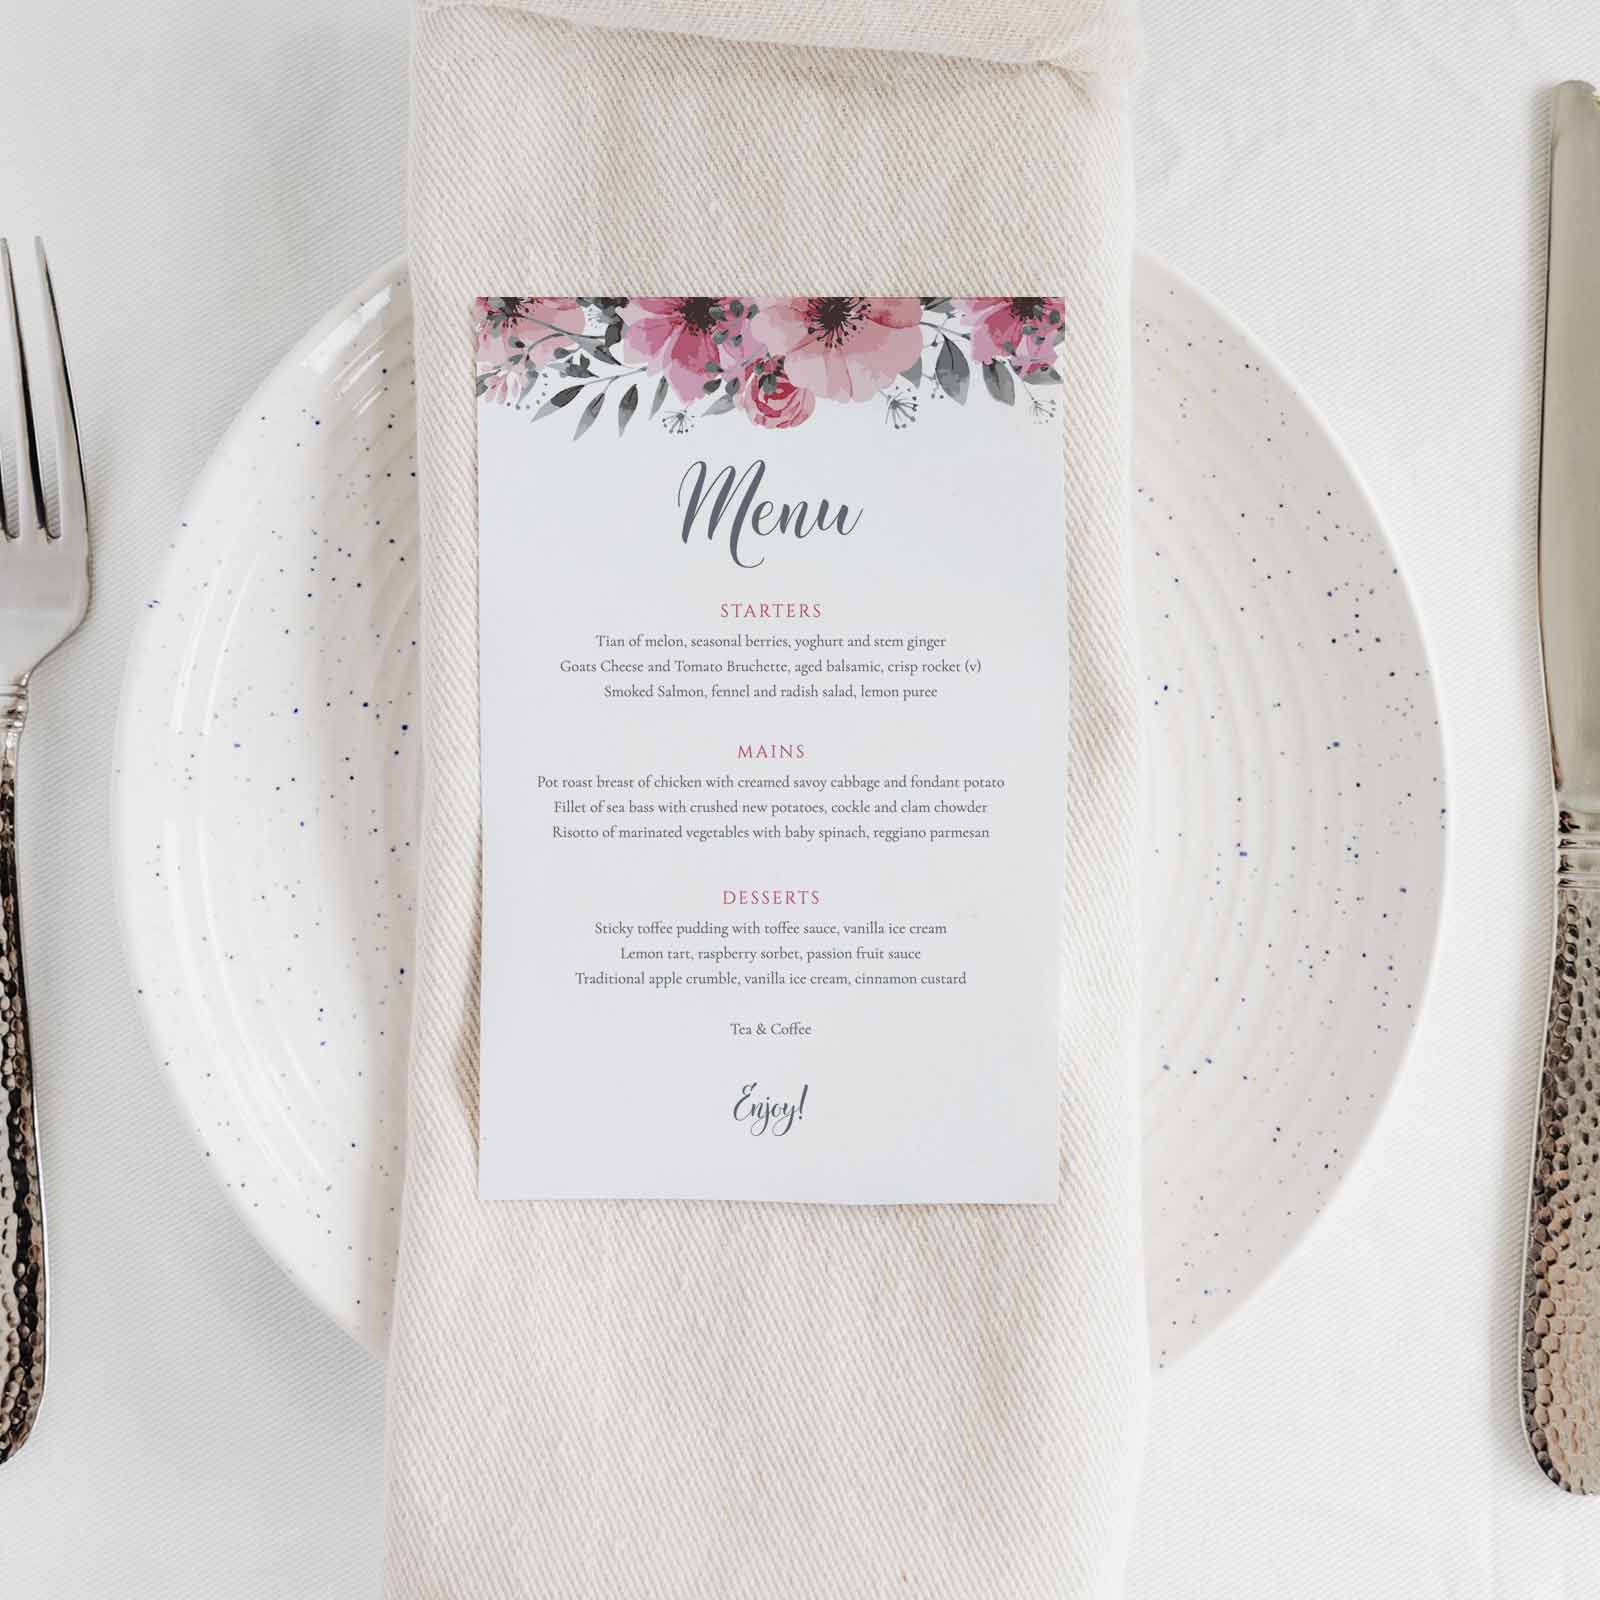 Wedding menu print on a wedding table place setting